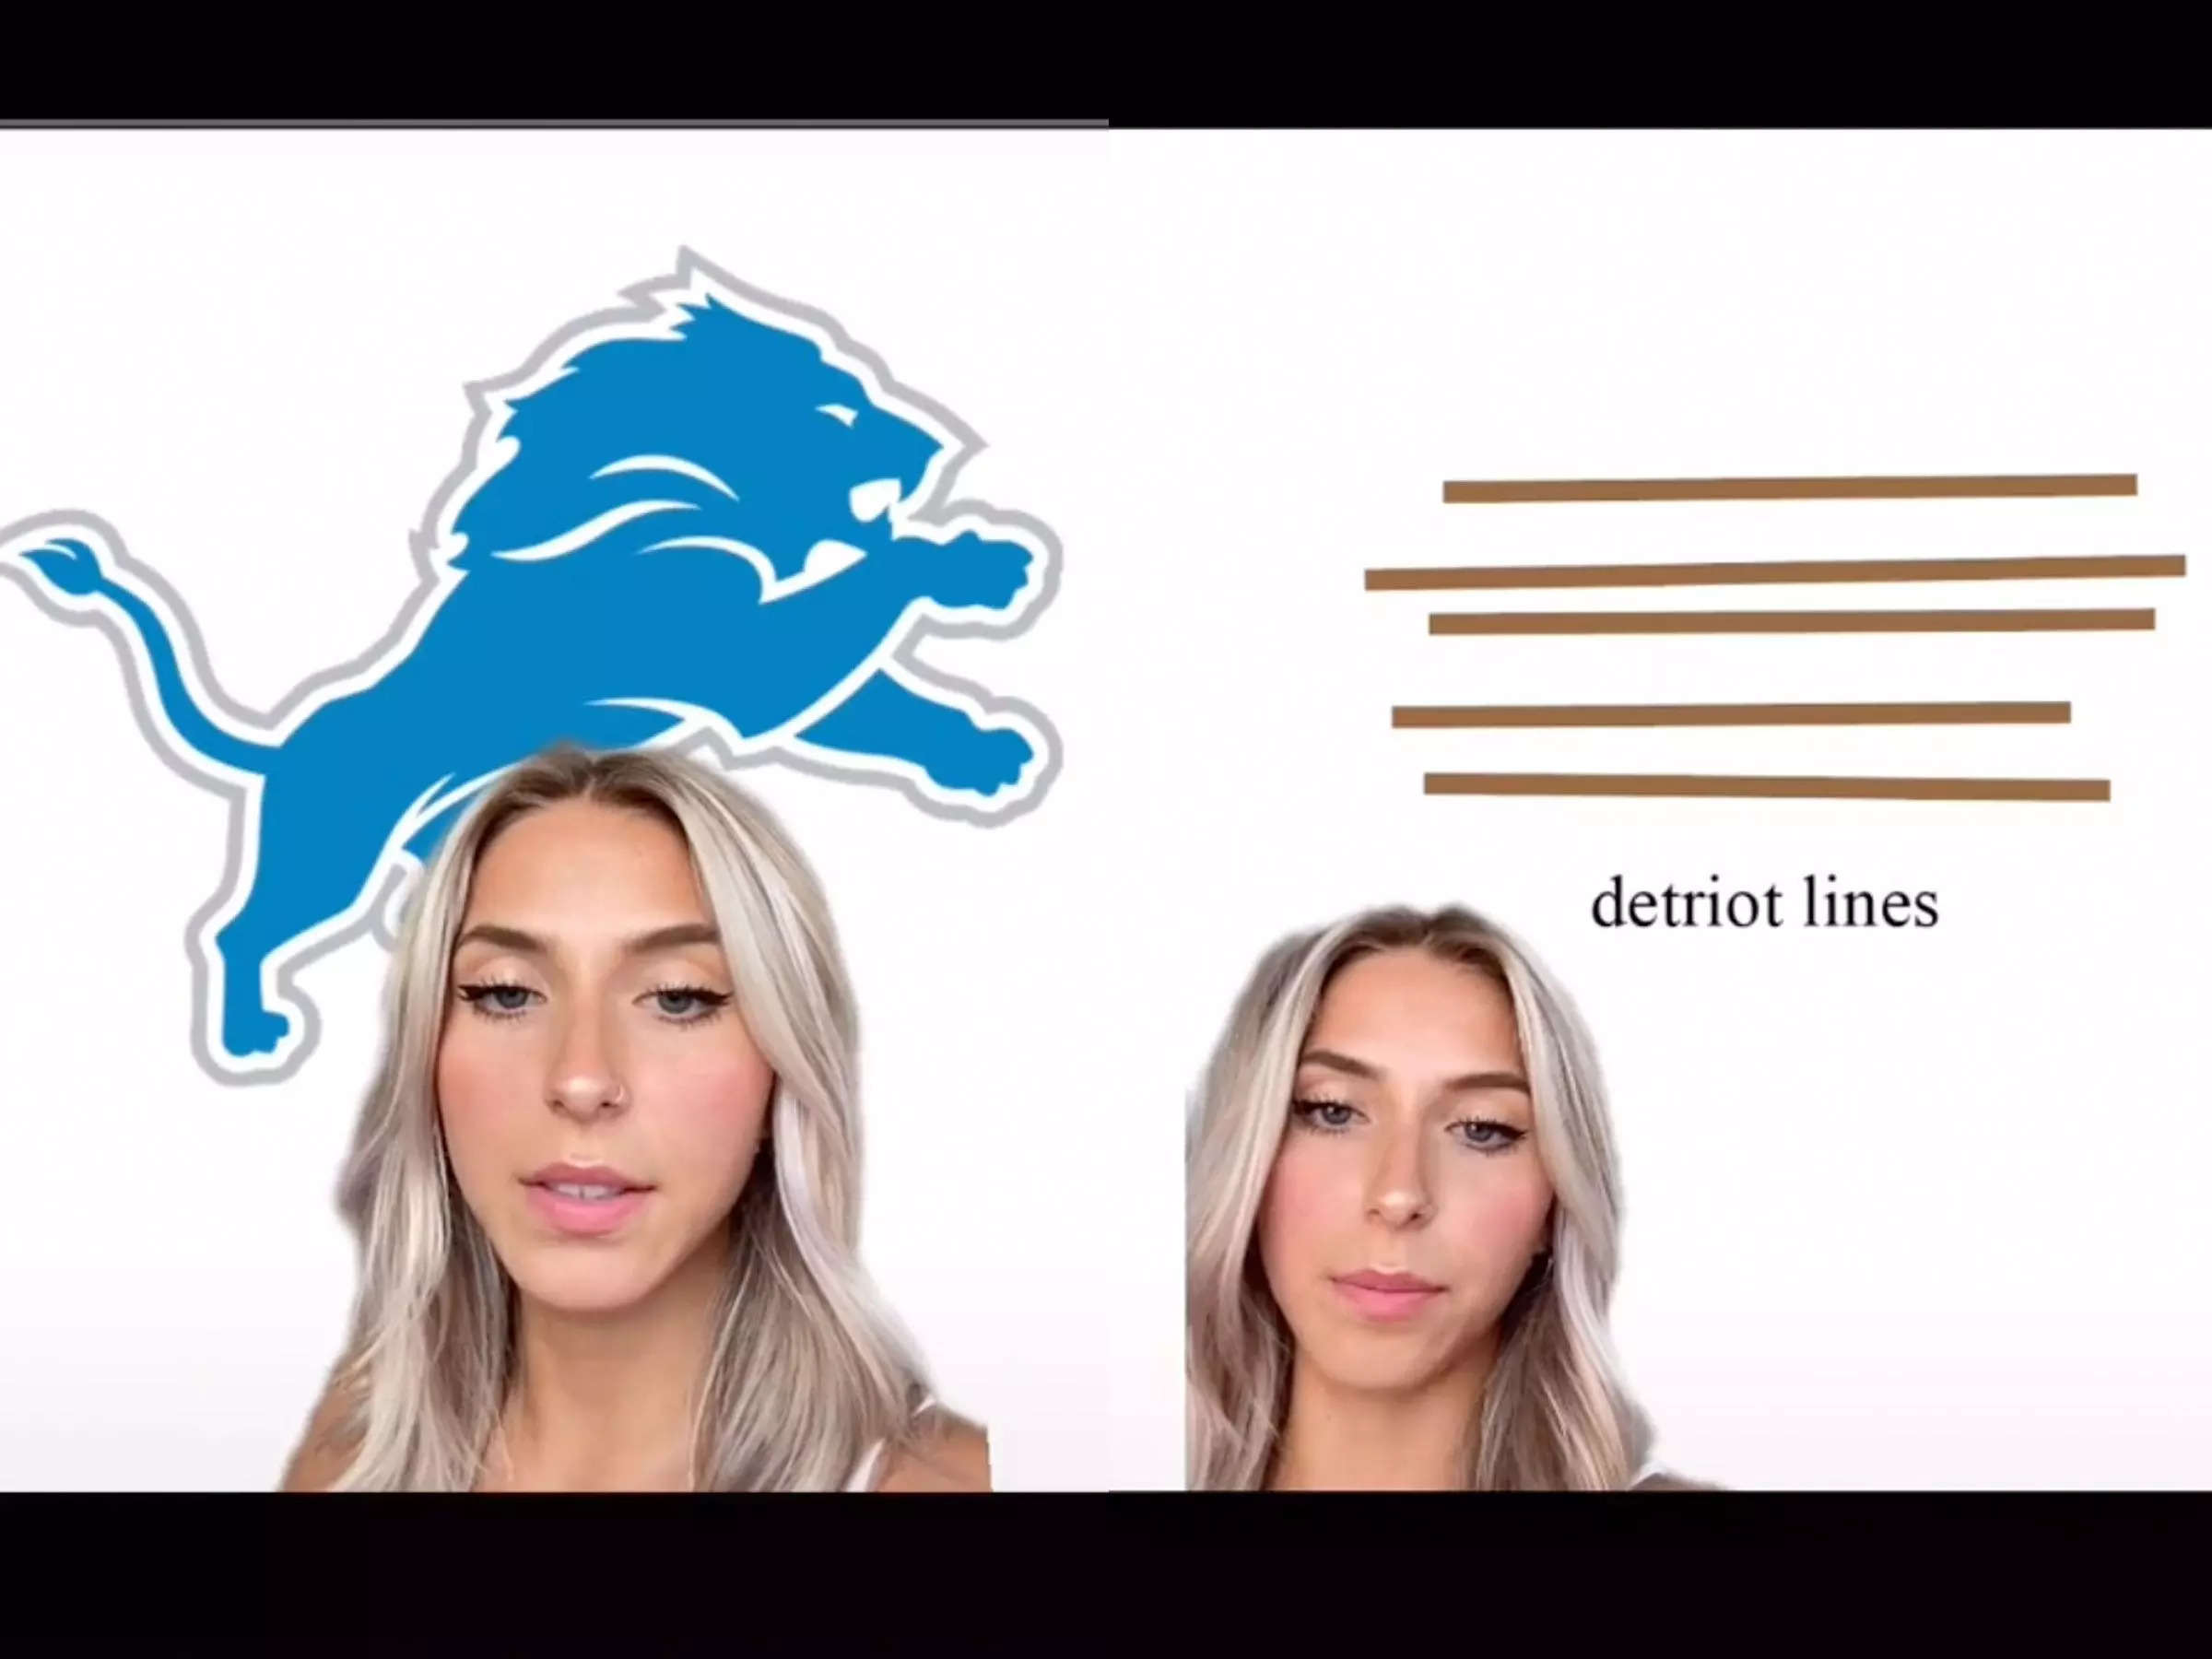 Emily Zugay jokingly recreates the Detroit Lions